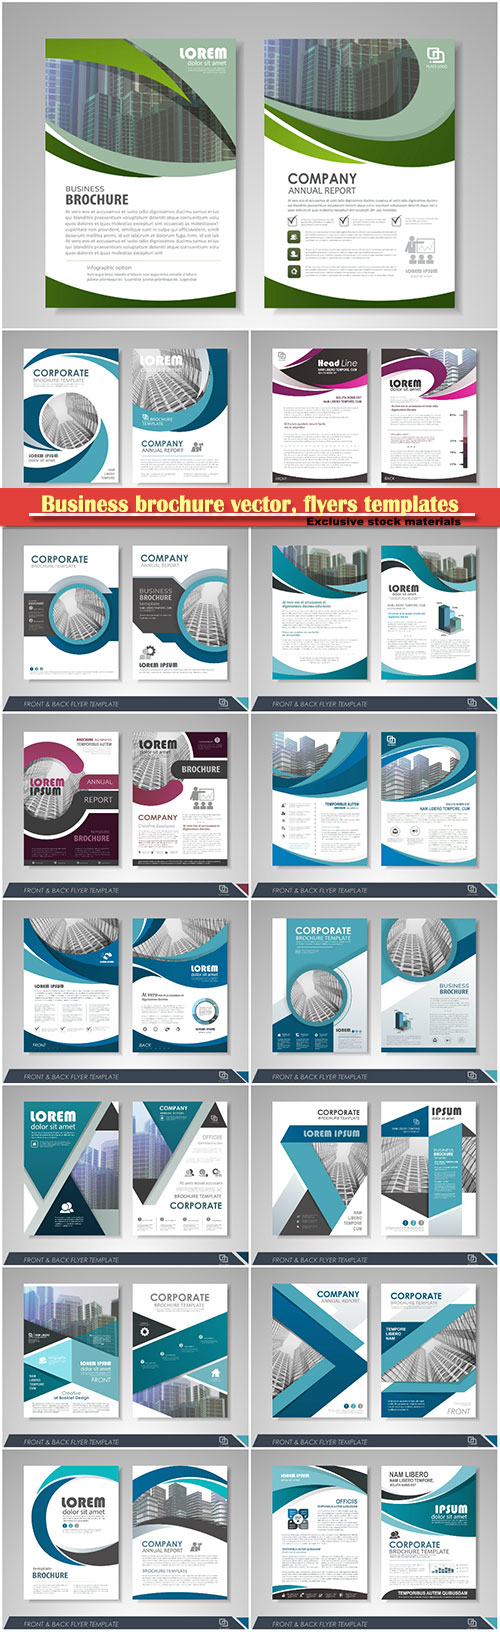 Business brochure vector, flyers templates, report cover design # 92